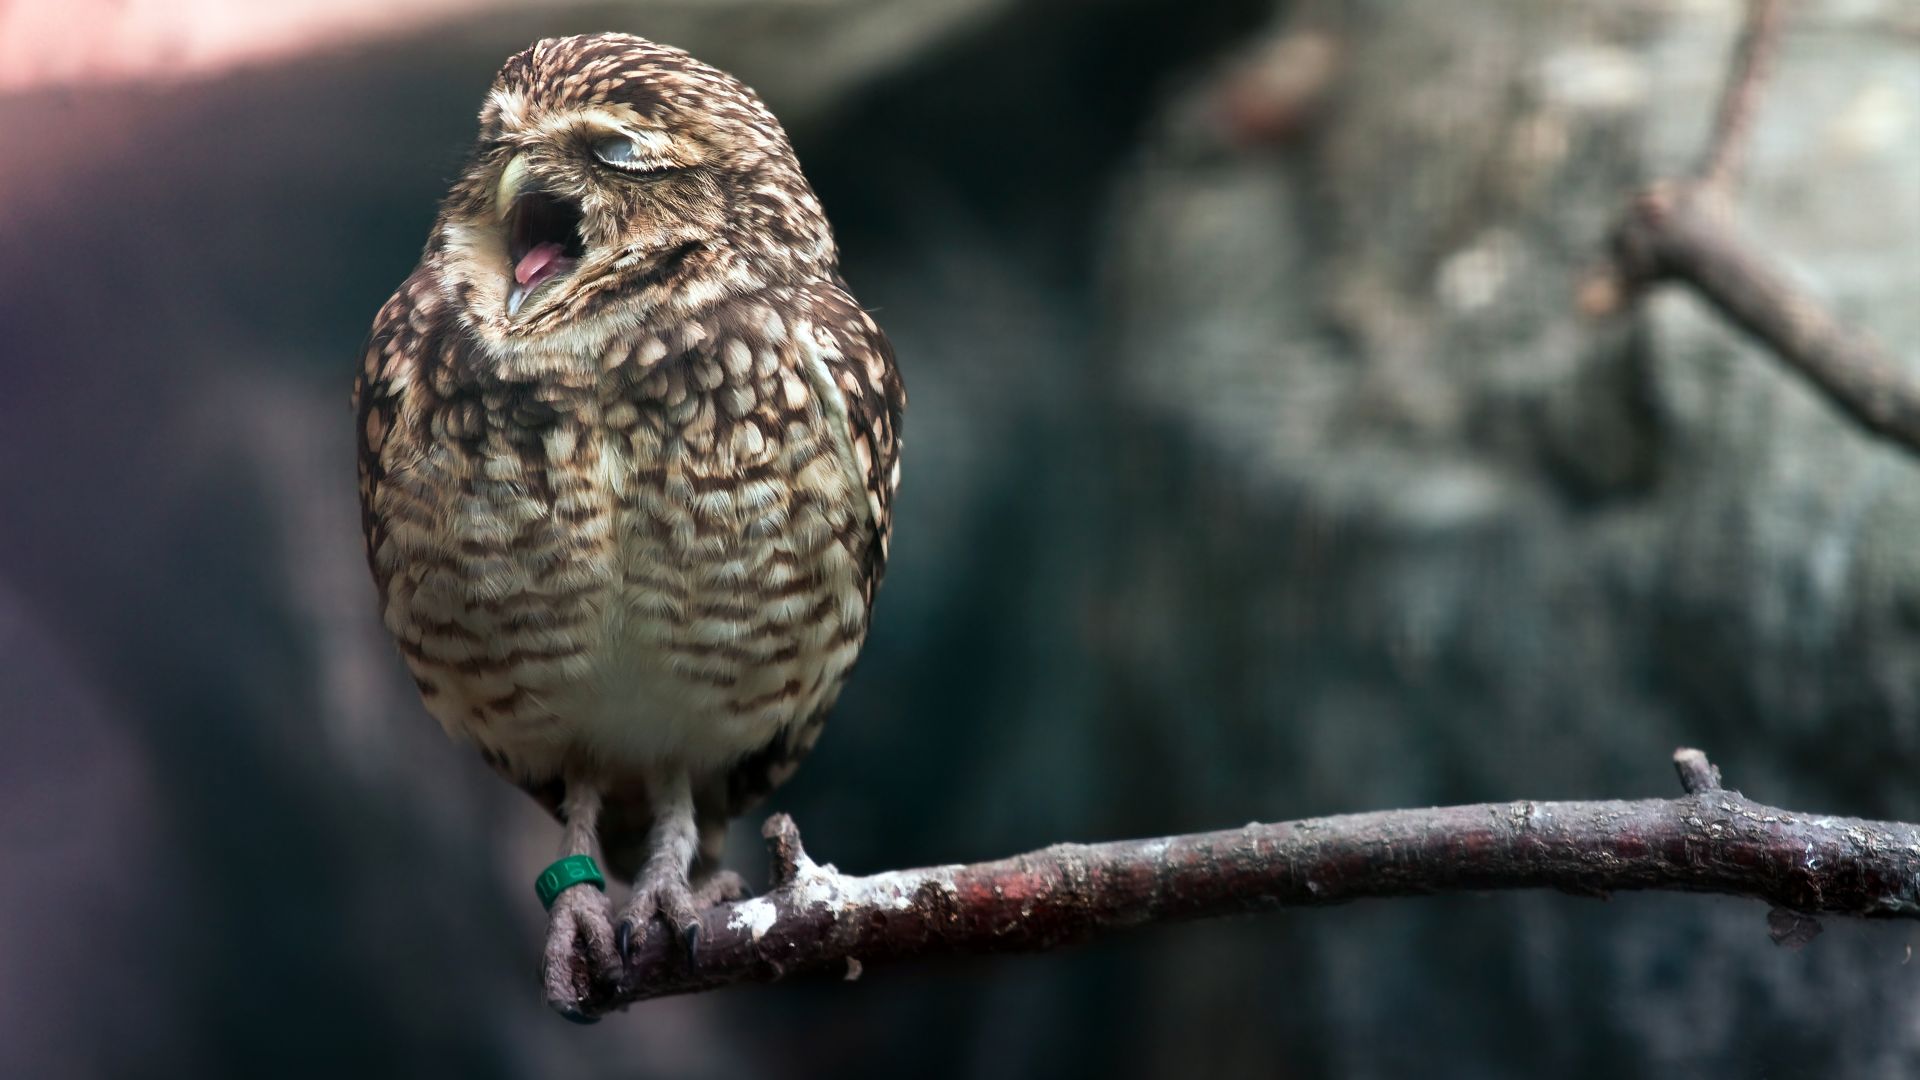 Owl, cute animals (horizontal)